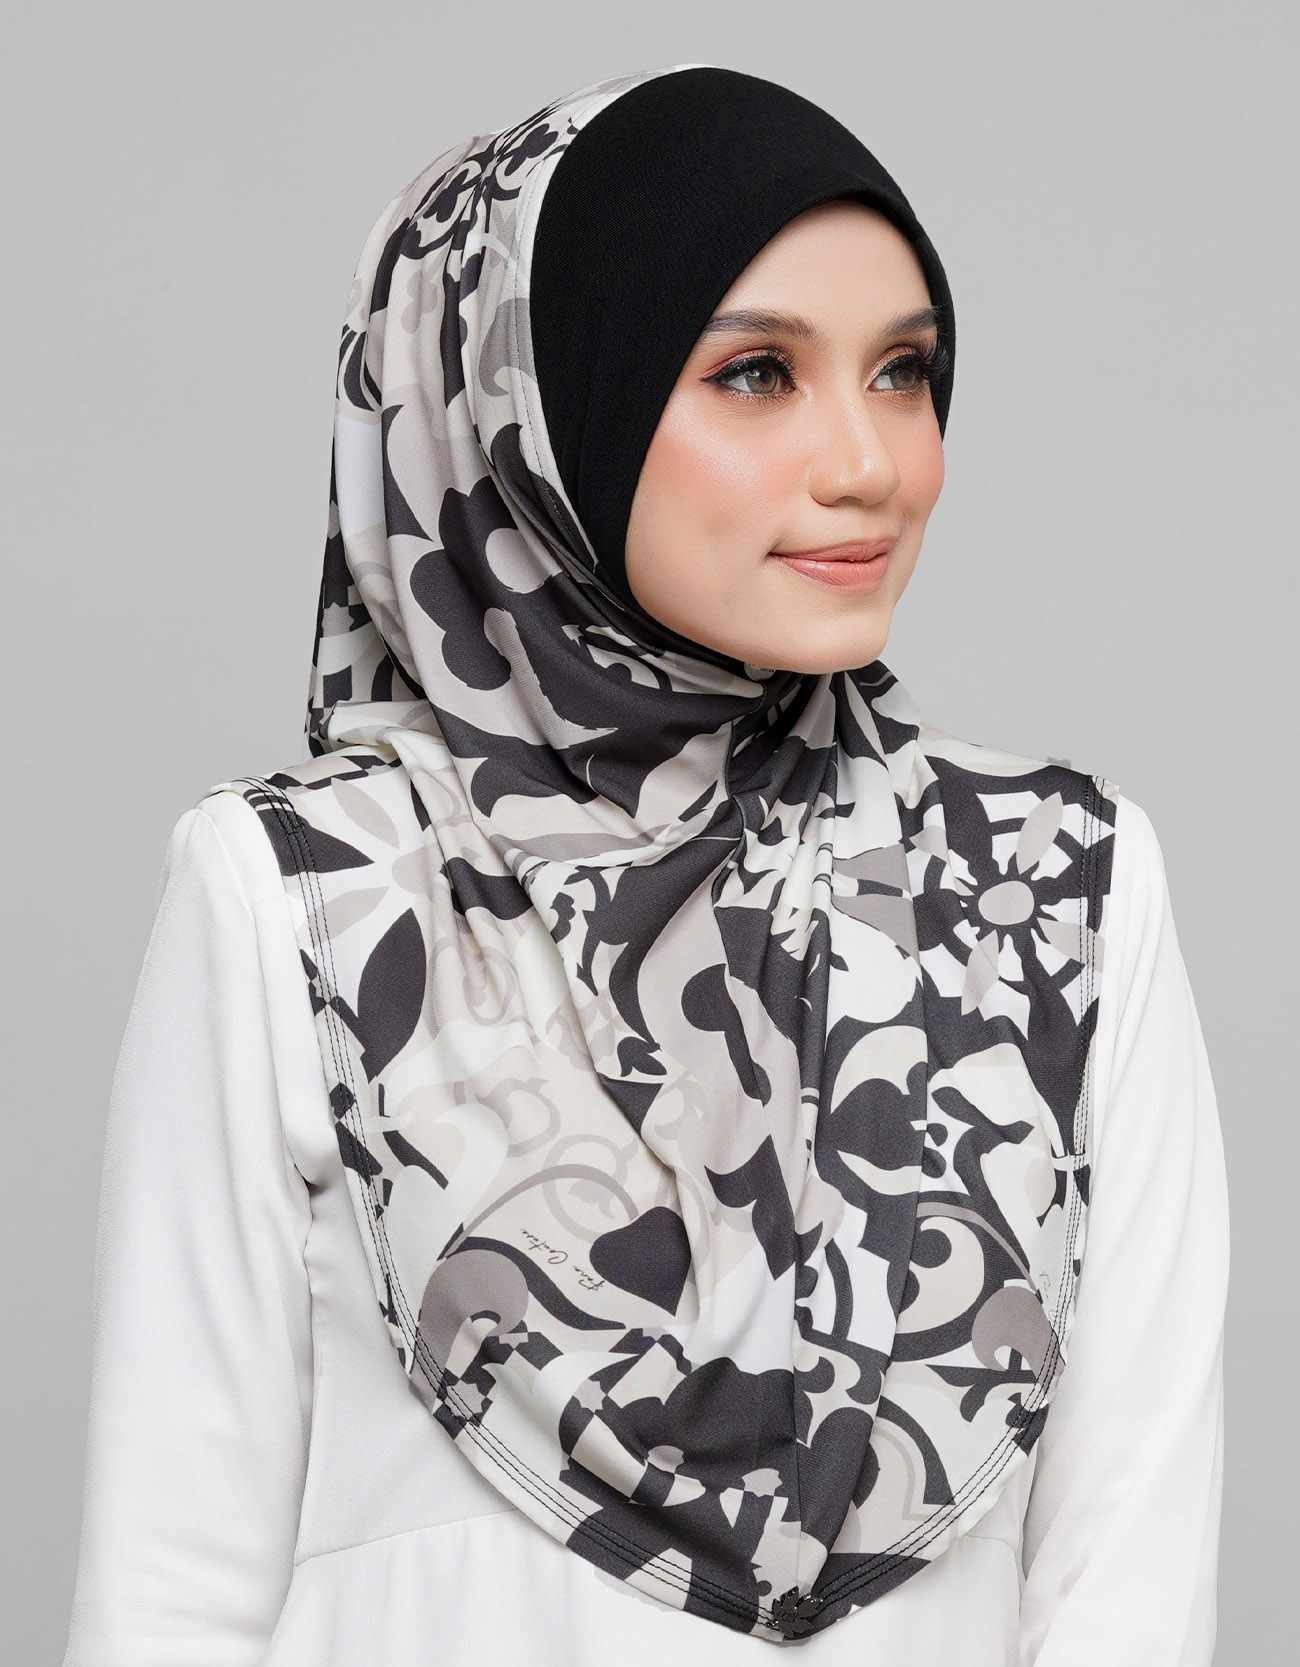 Express Hijab Damia Signature 11 - Black Edition&w=300&zc=1